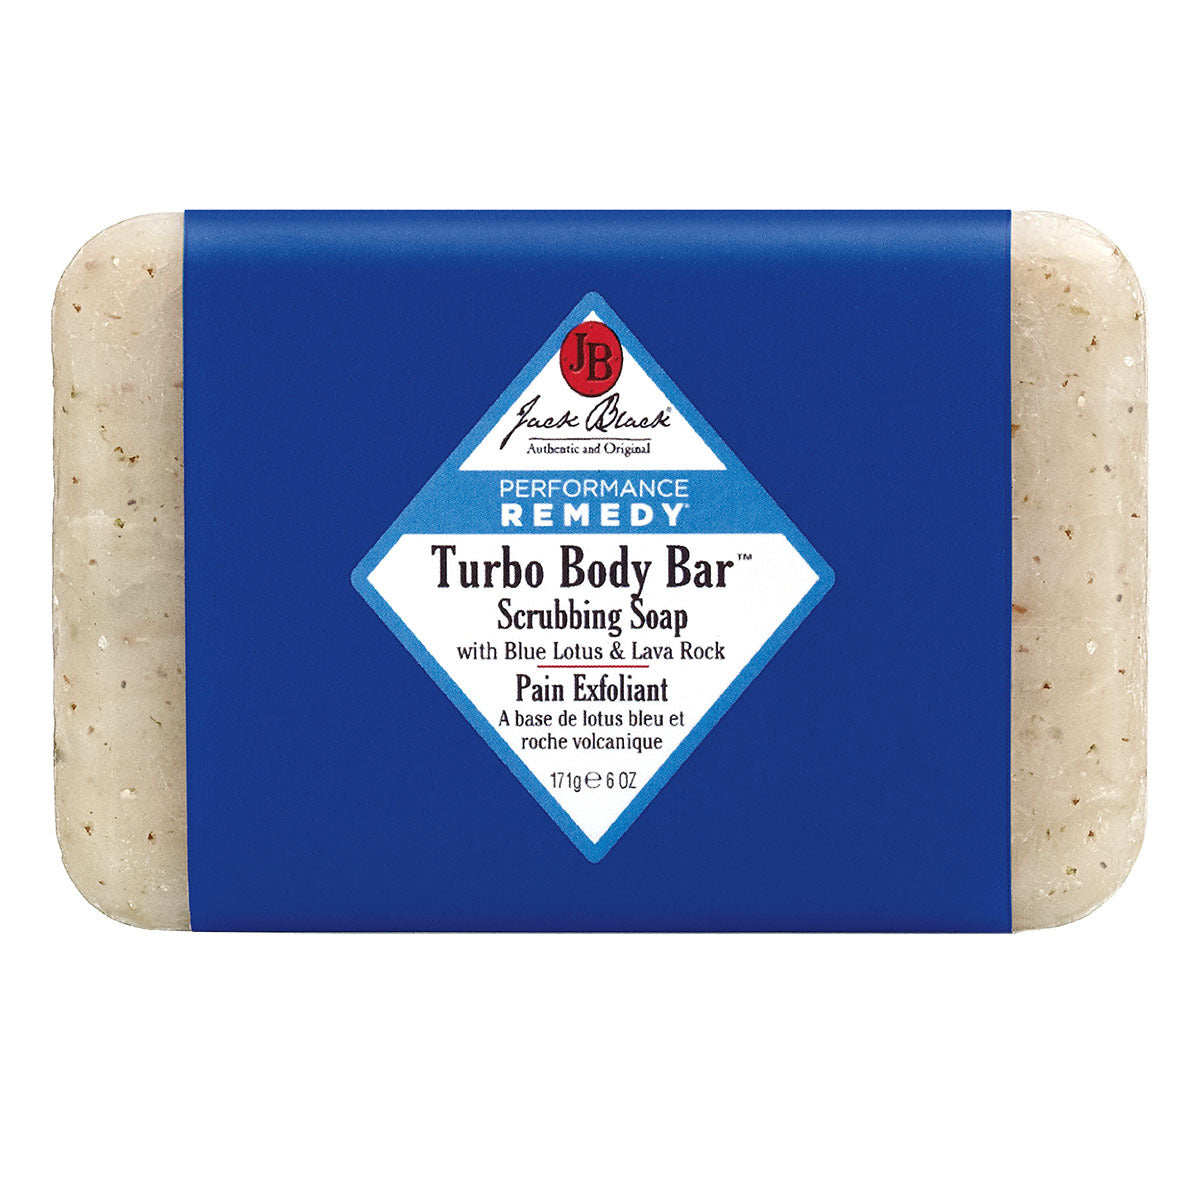 Primary image of Turbo Body Bar Scrubbing Soap